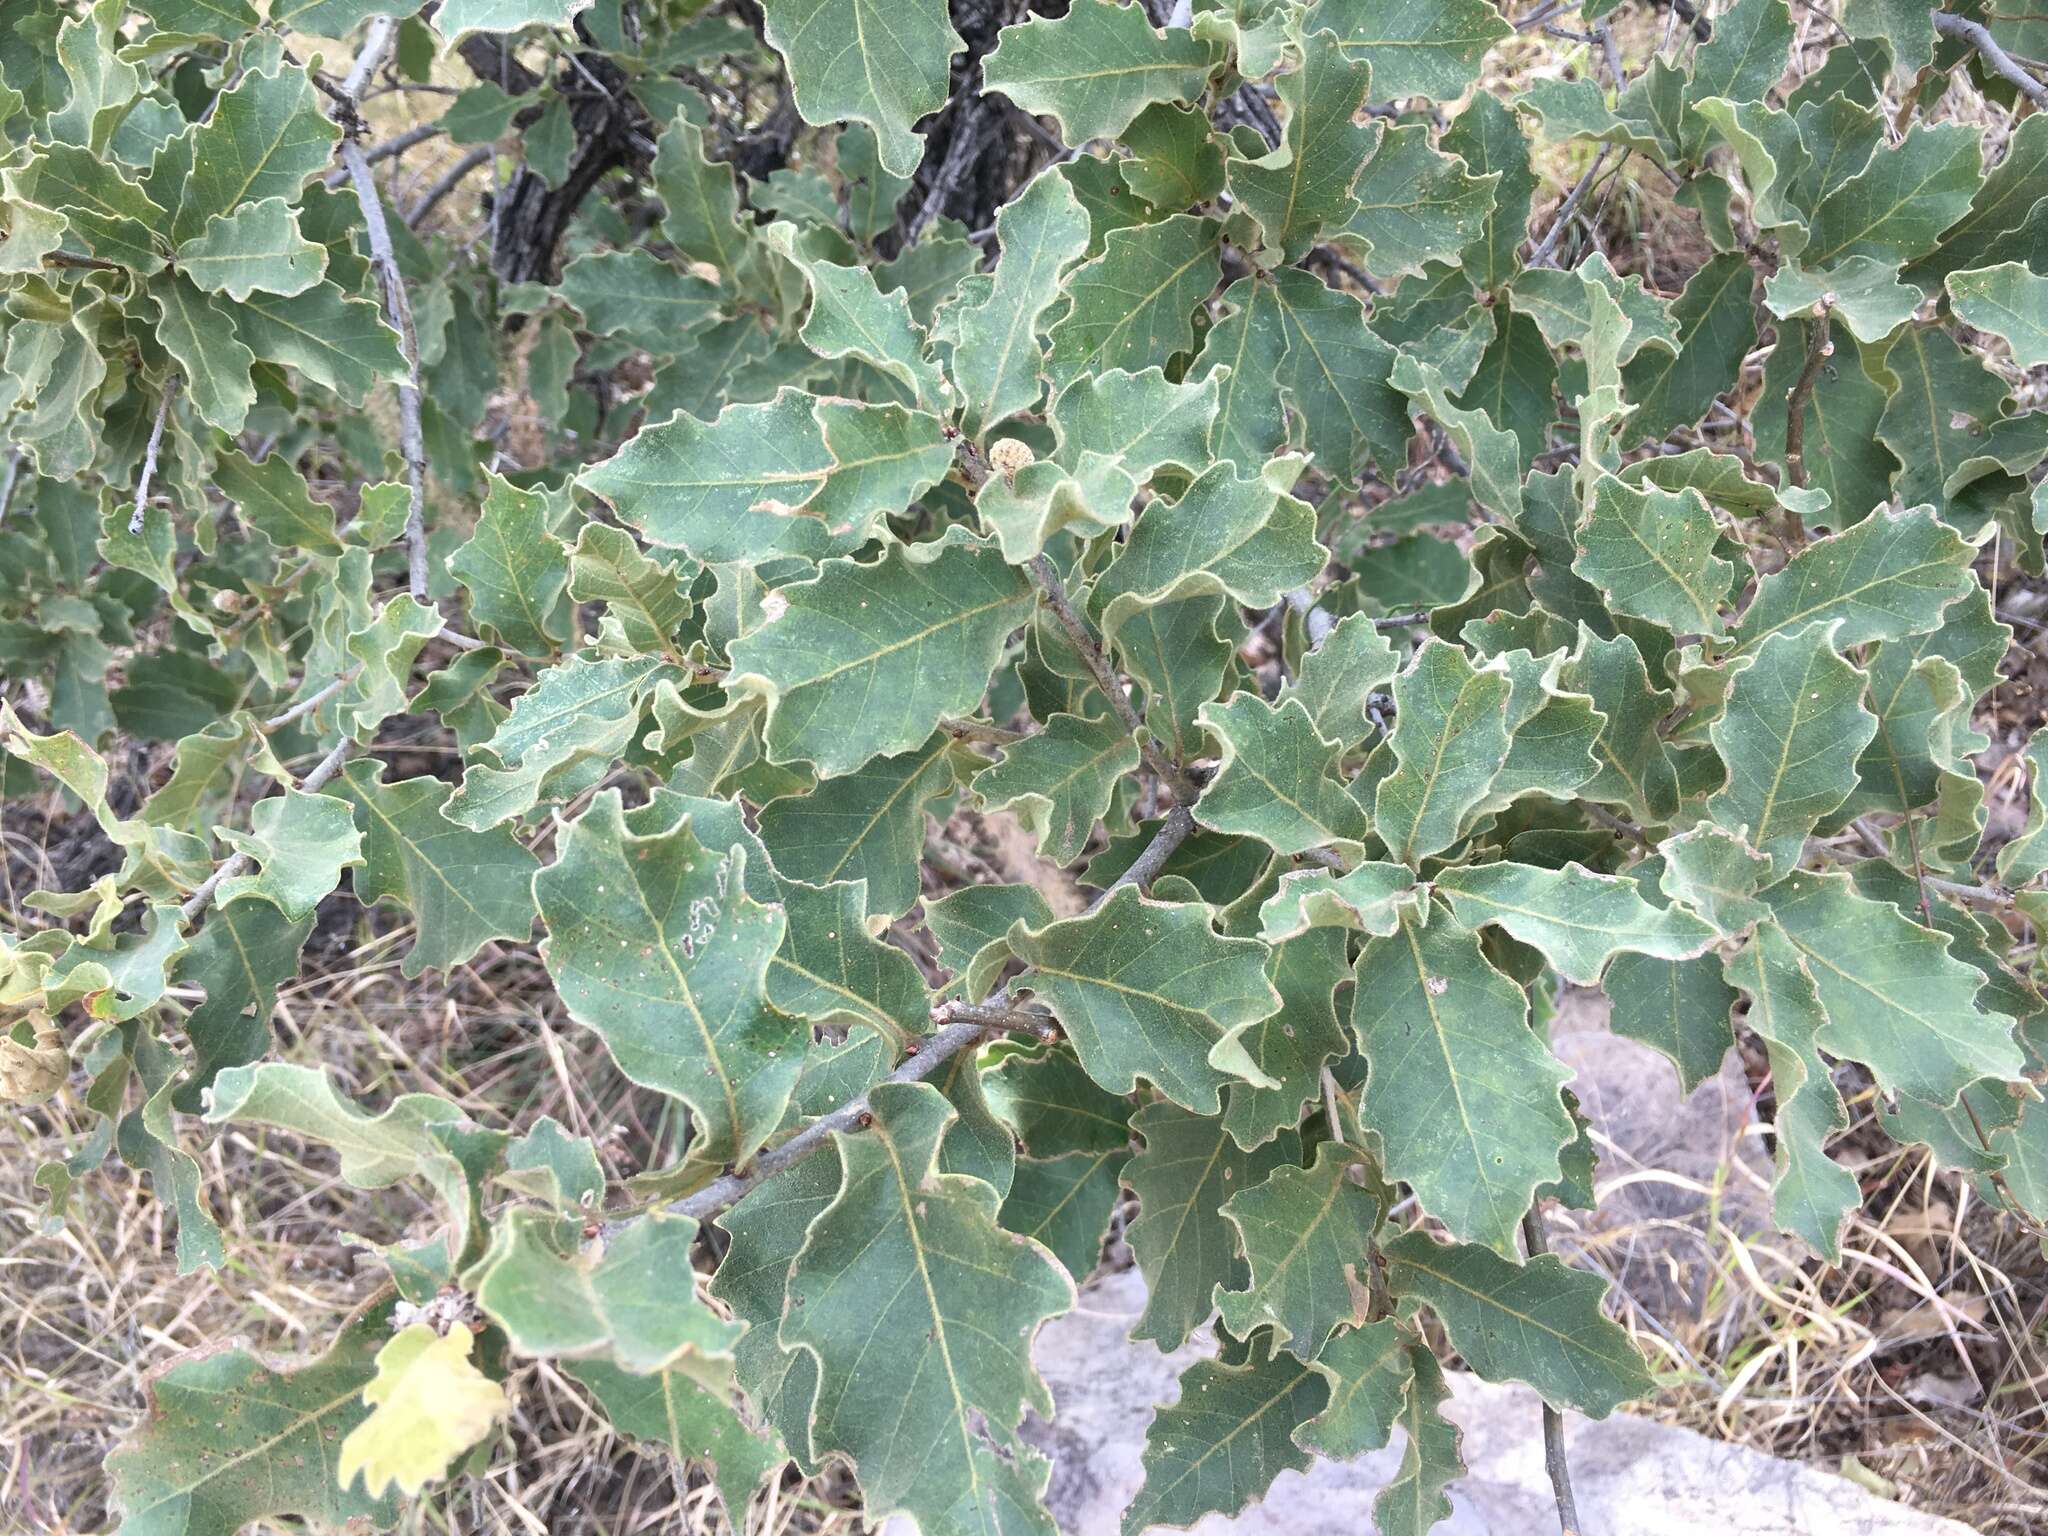 Image of Chihuahuan oak